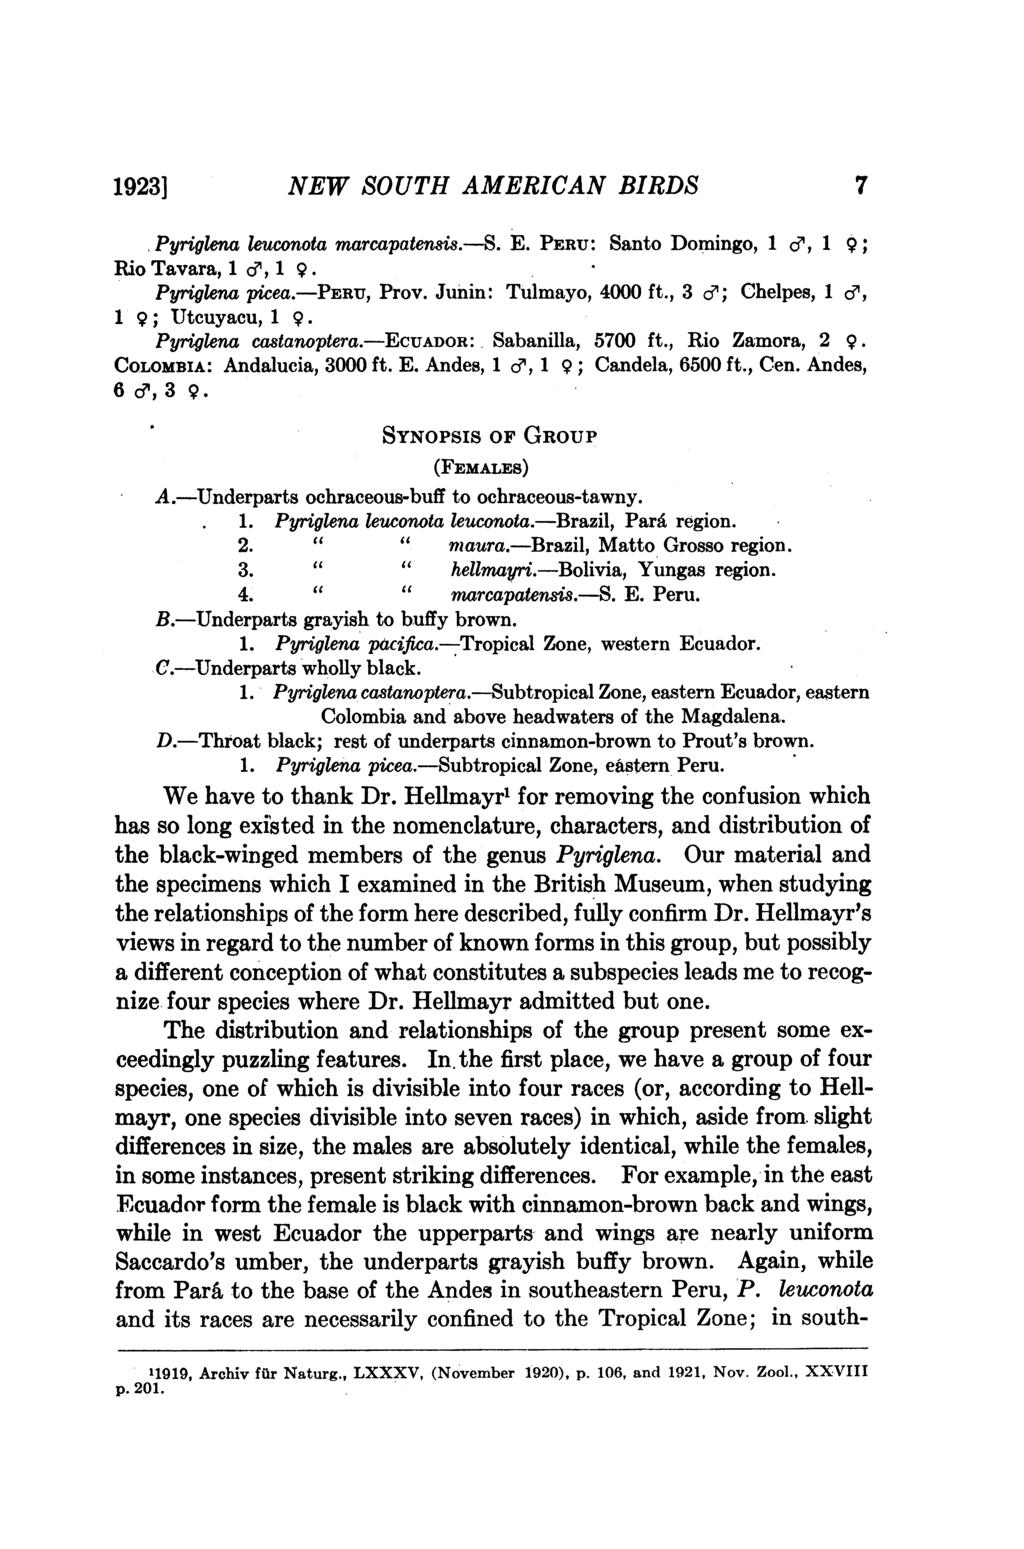 1923] NEW SOUTH AMERICAN BIRDS 7 Pyriglena leuconota marcapatensis.-s. E. PERU: Santo Domingo, 1 a>, 1 9; Rio Tavara, 1 ', 1 9. Pyriglena picea.-peru, Prov. Junin: Tulmayo, 4000 ft.